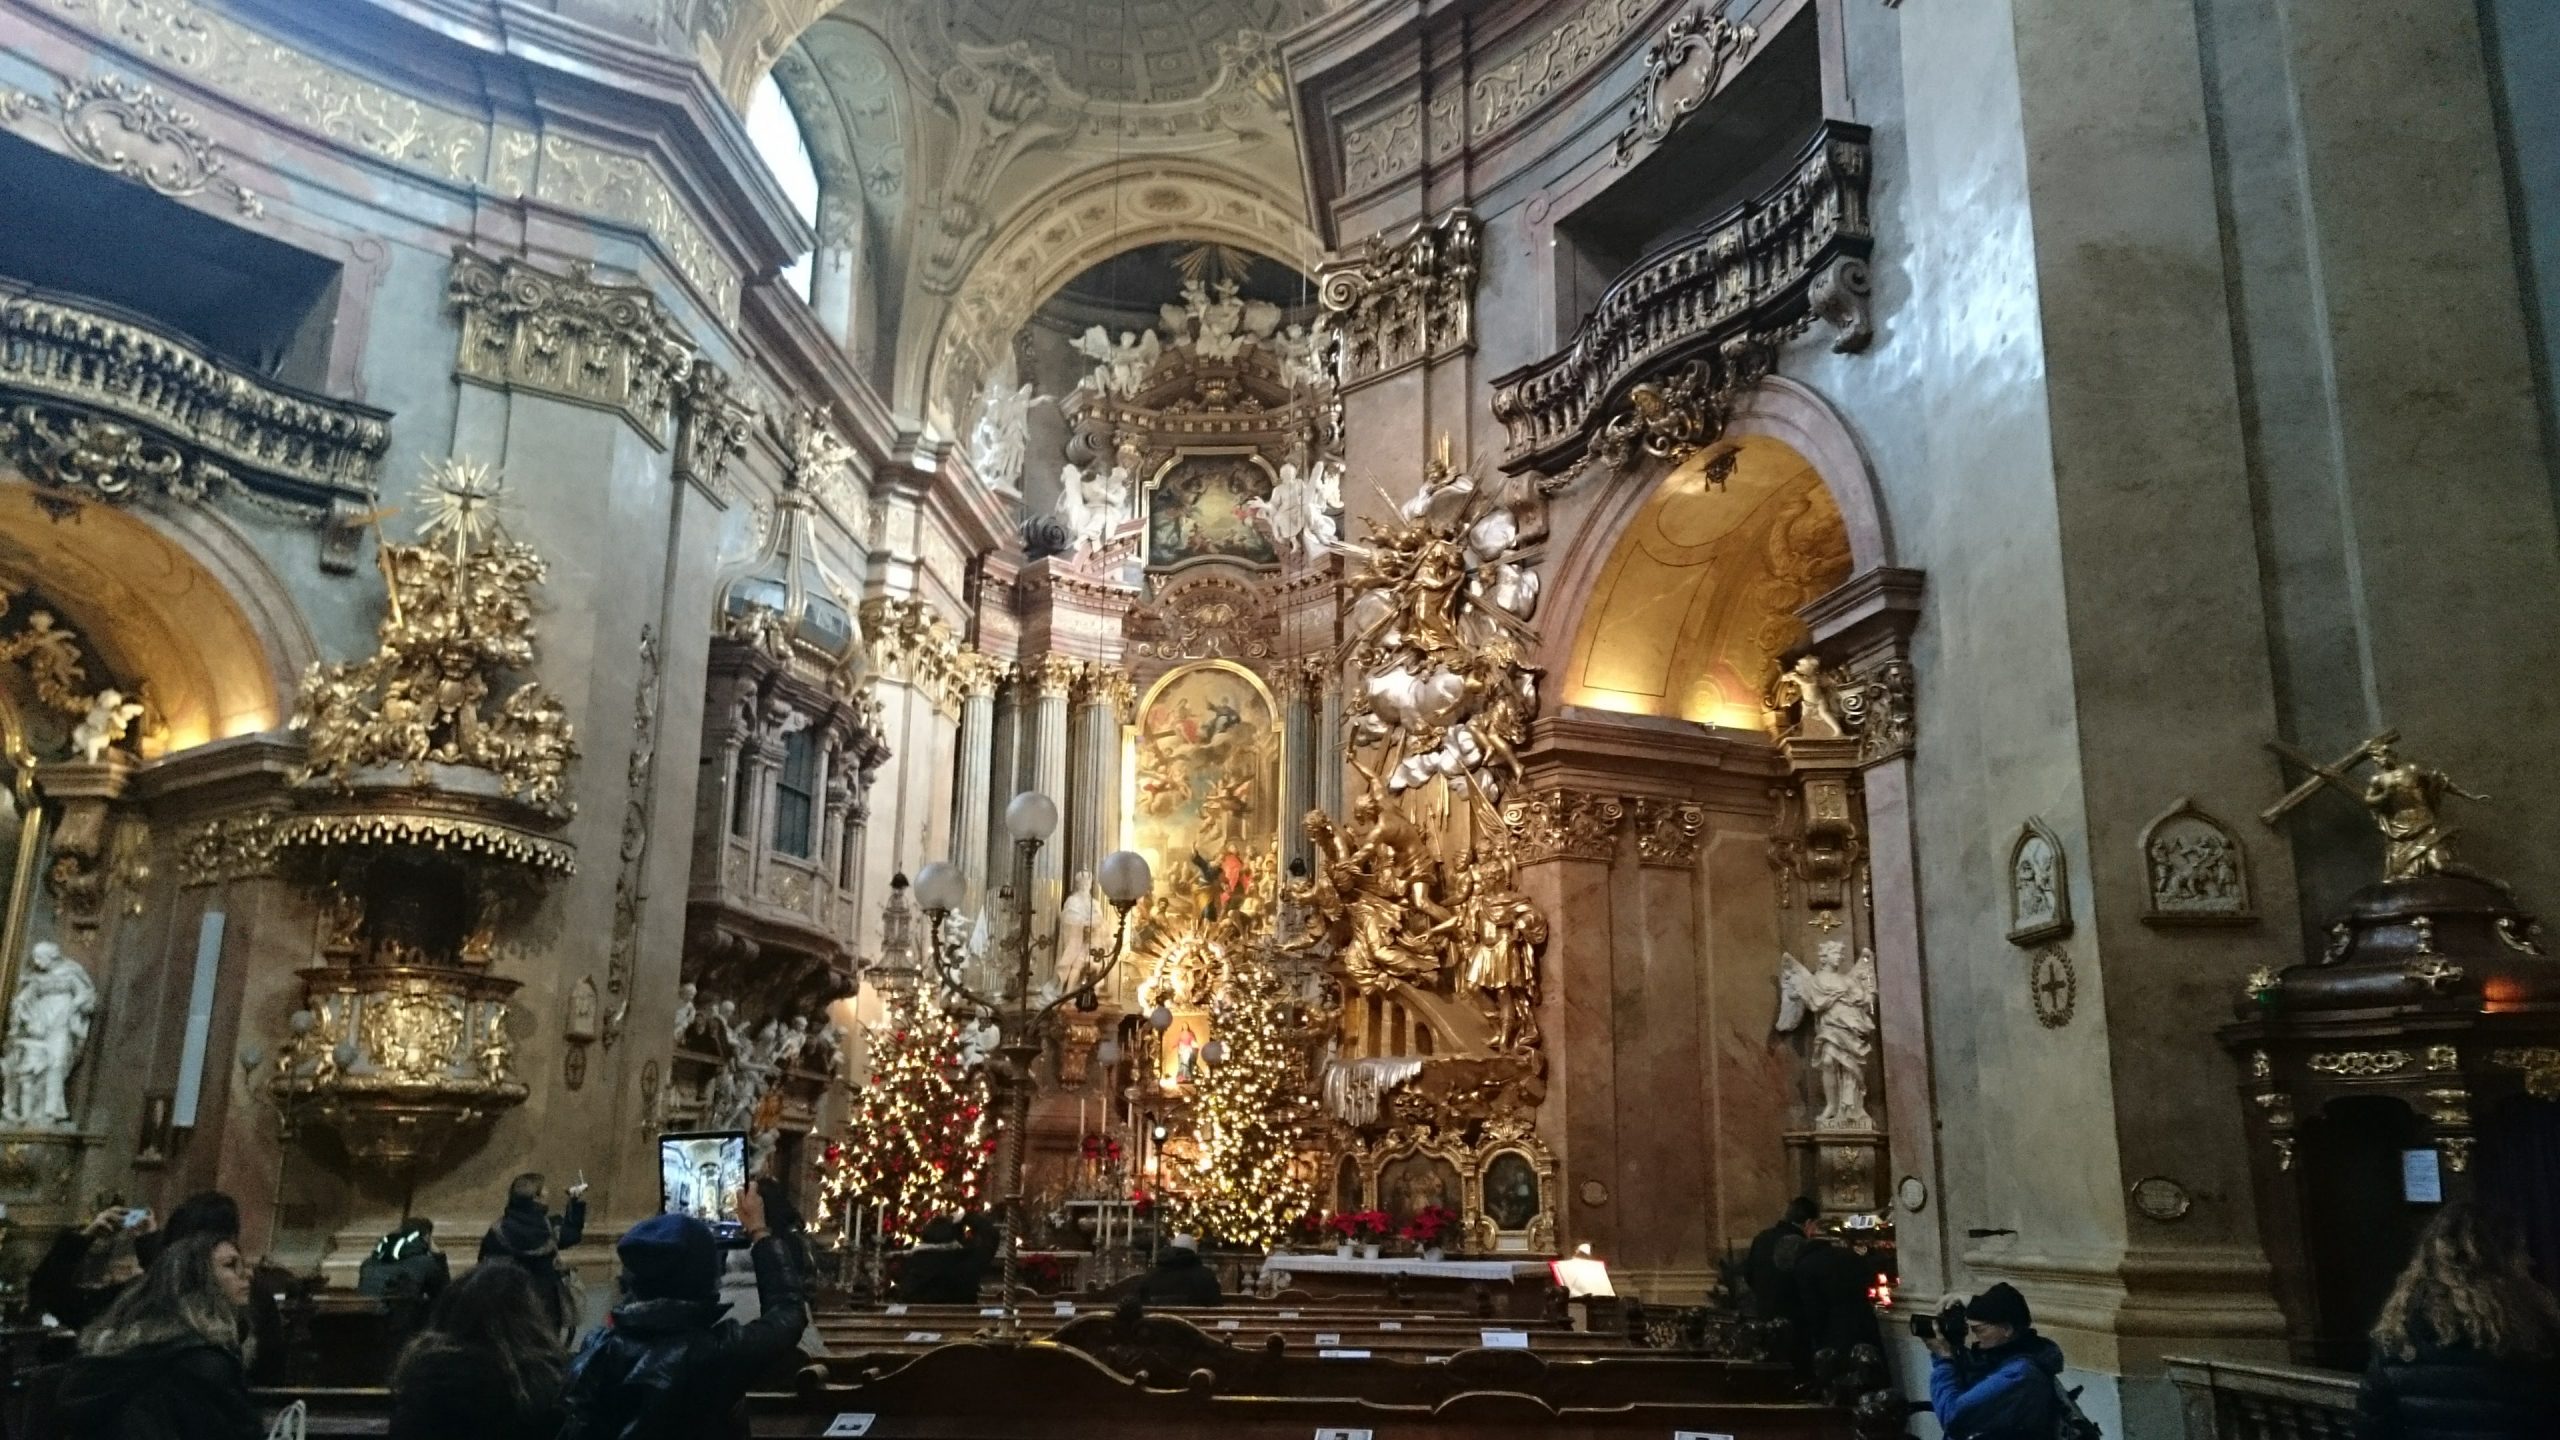 Peterskirche Wenen | stedentrip in de winter